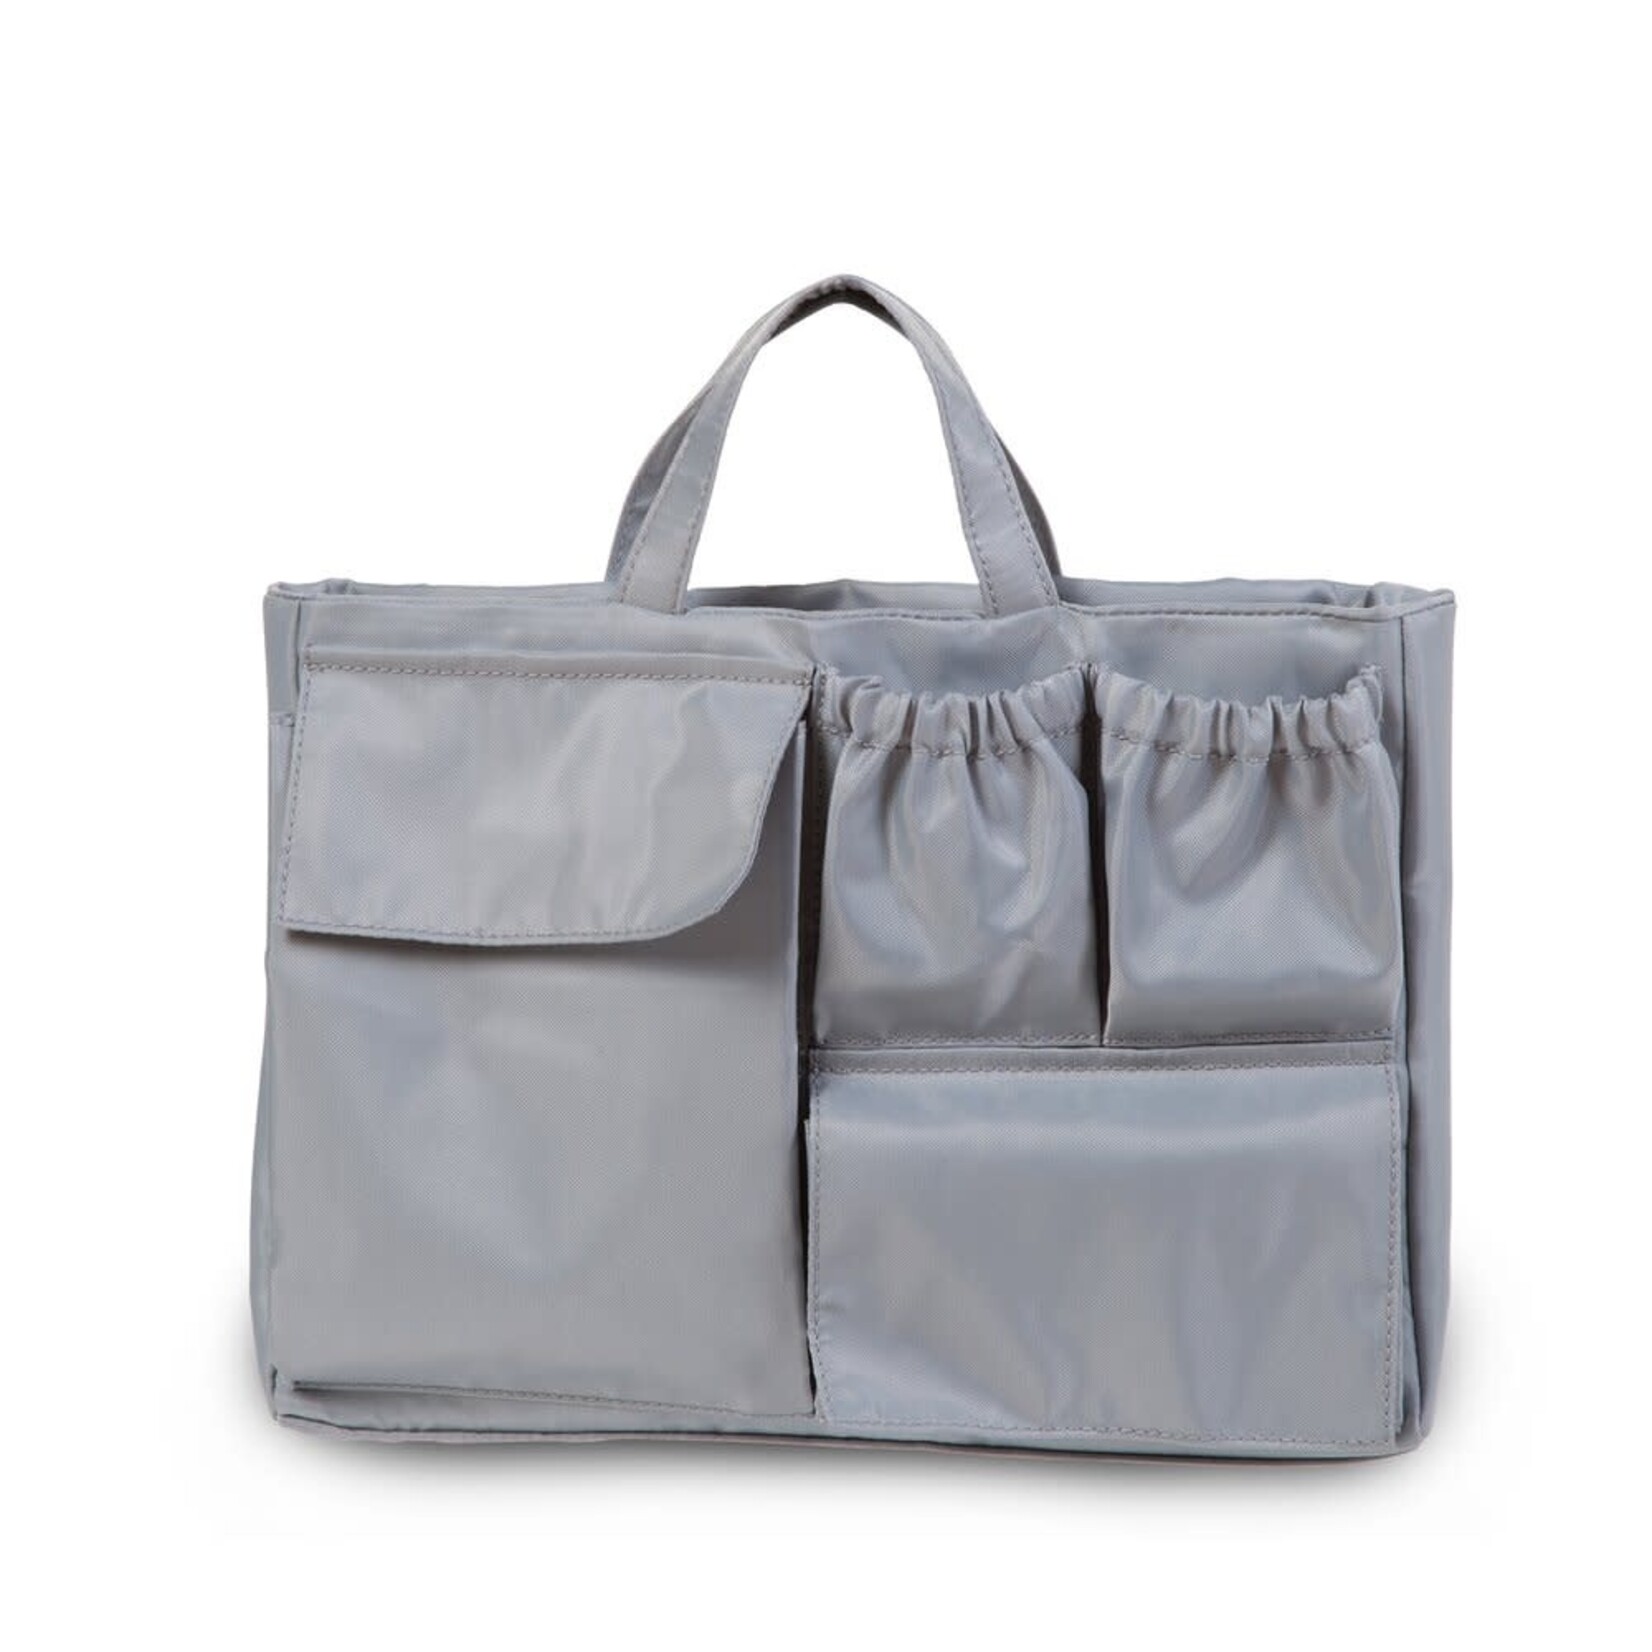 Childhome Childhome - Bag In Bag Tas Organiser - Canvas - Grijs